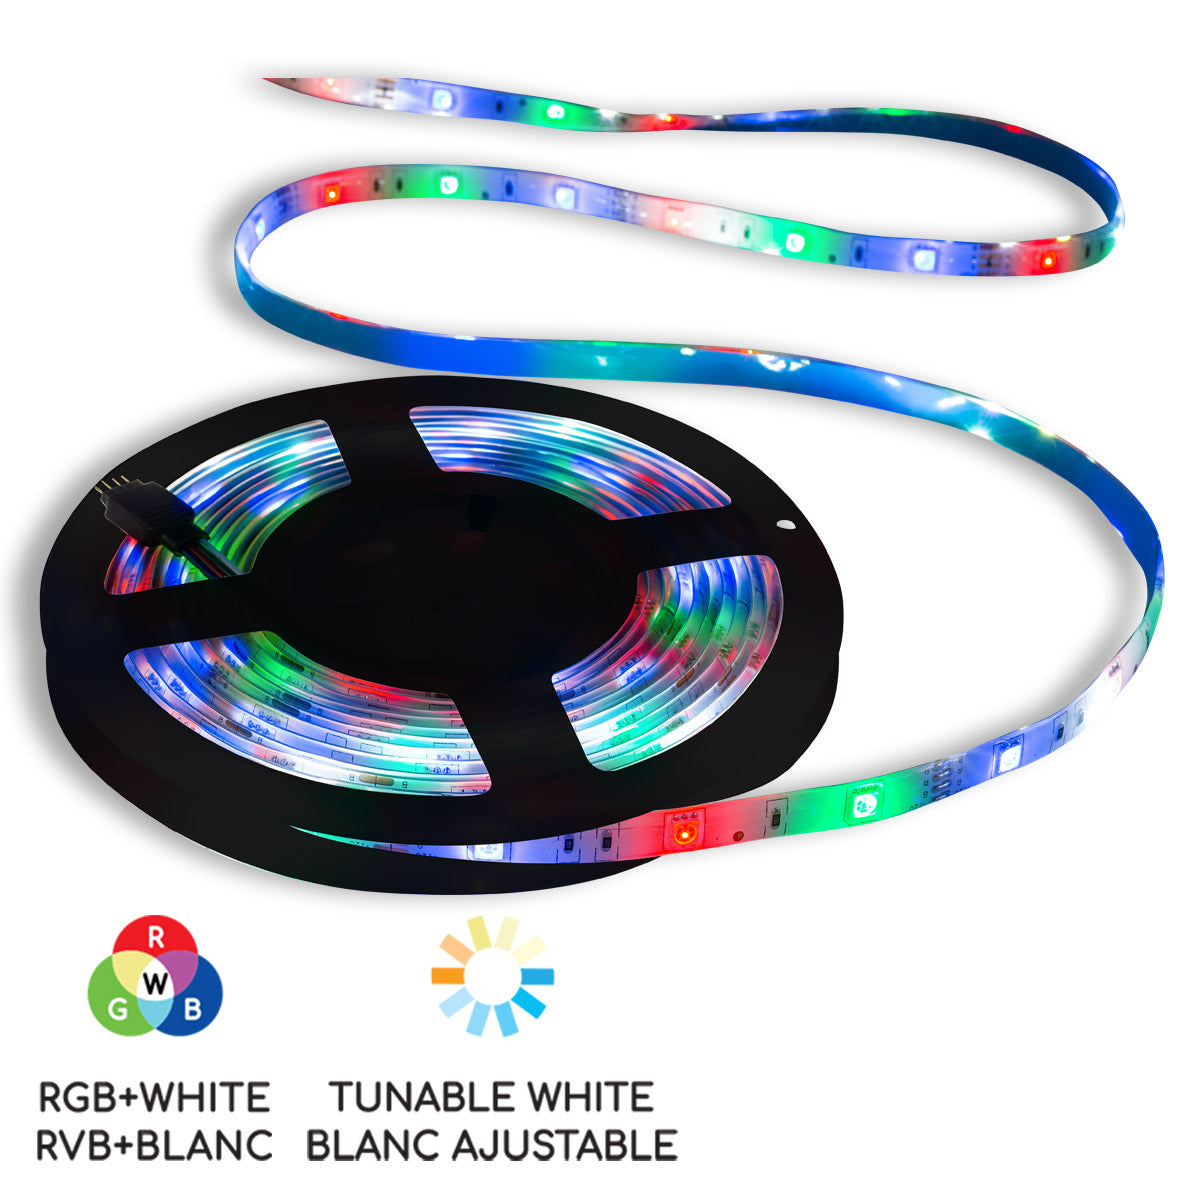 RGBW LED Strip Accessories Set